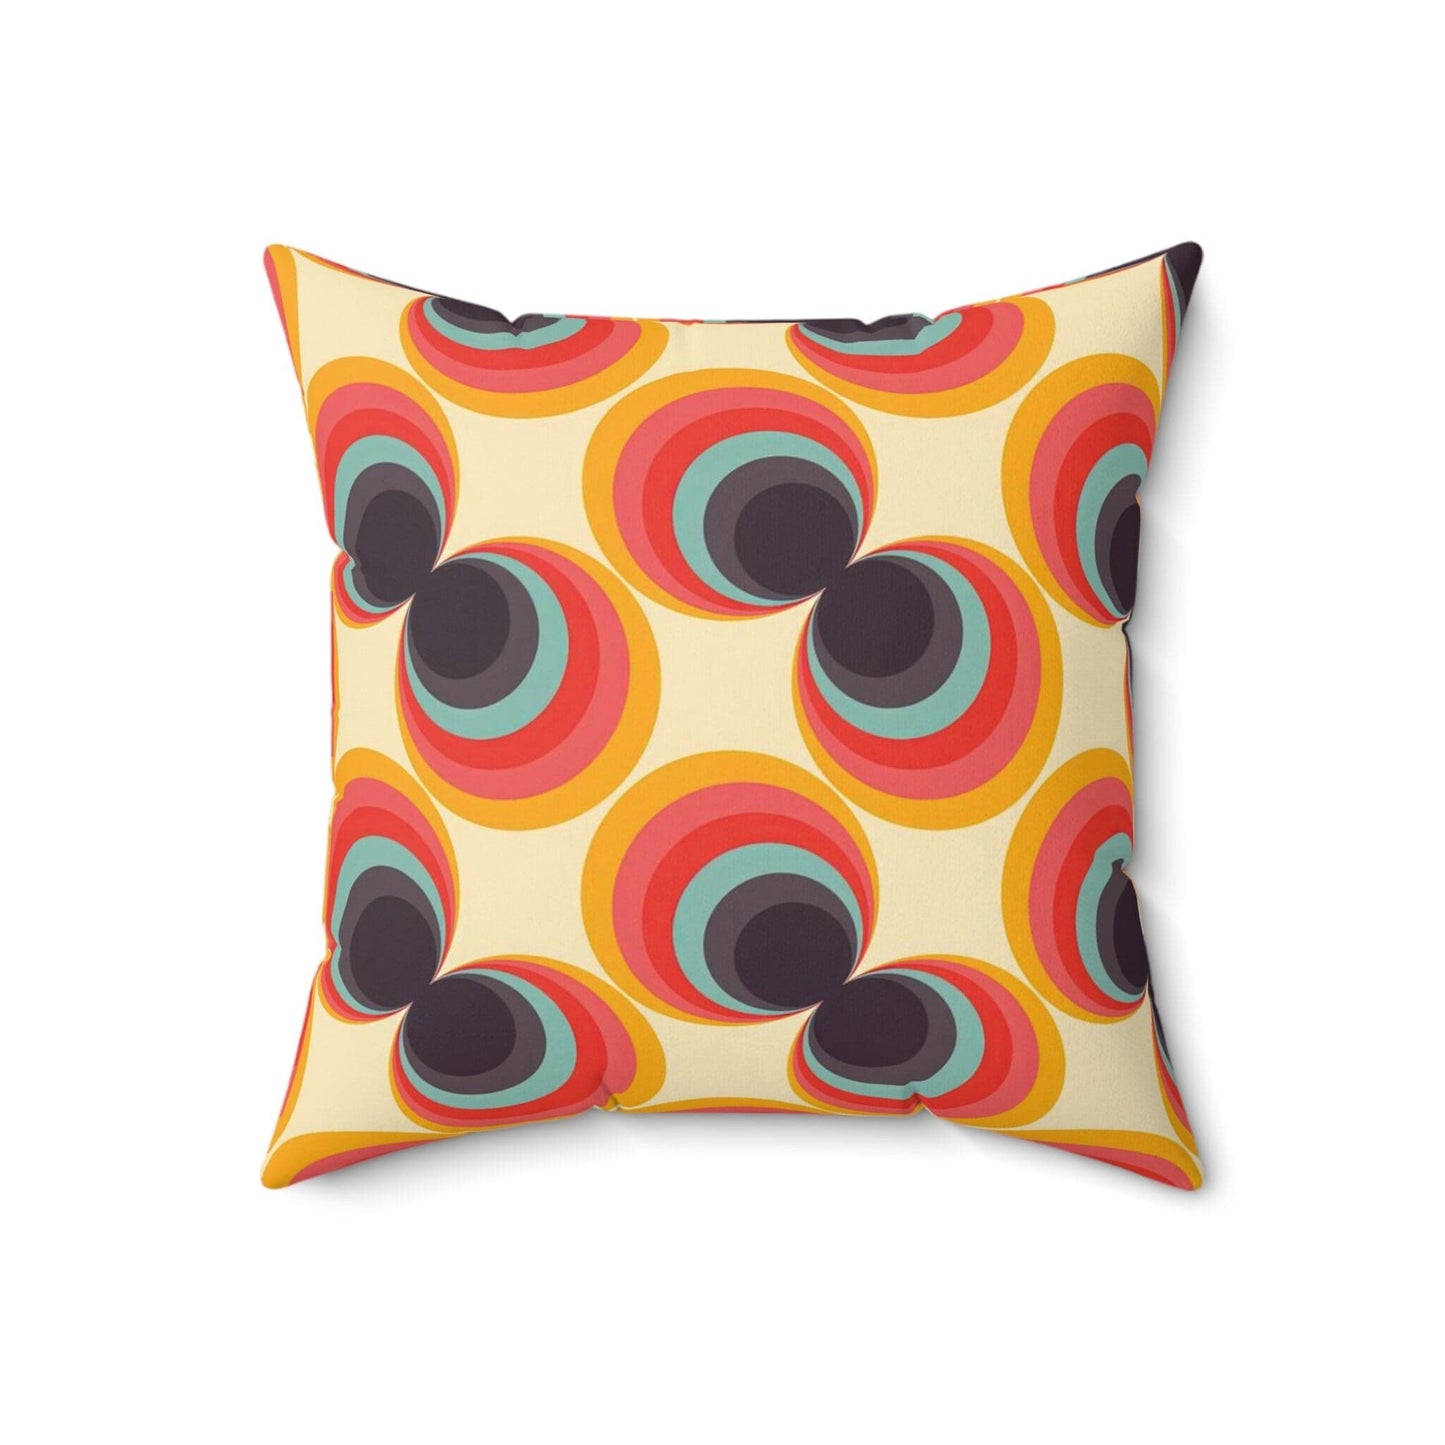 Kate McEnroe New York Mid Century Modern 70s Retro Throw Pillow, MCM Geometric Floral Orb Teal, Orange, Mustard Yellow, Beige Accent Pillow - 131082623 Throw Pillows